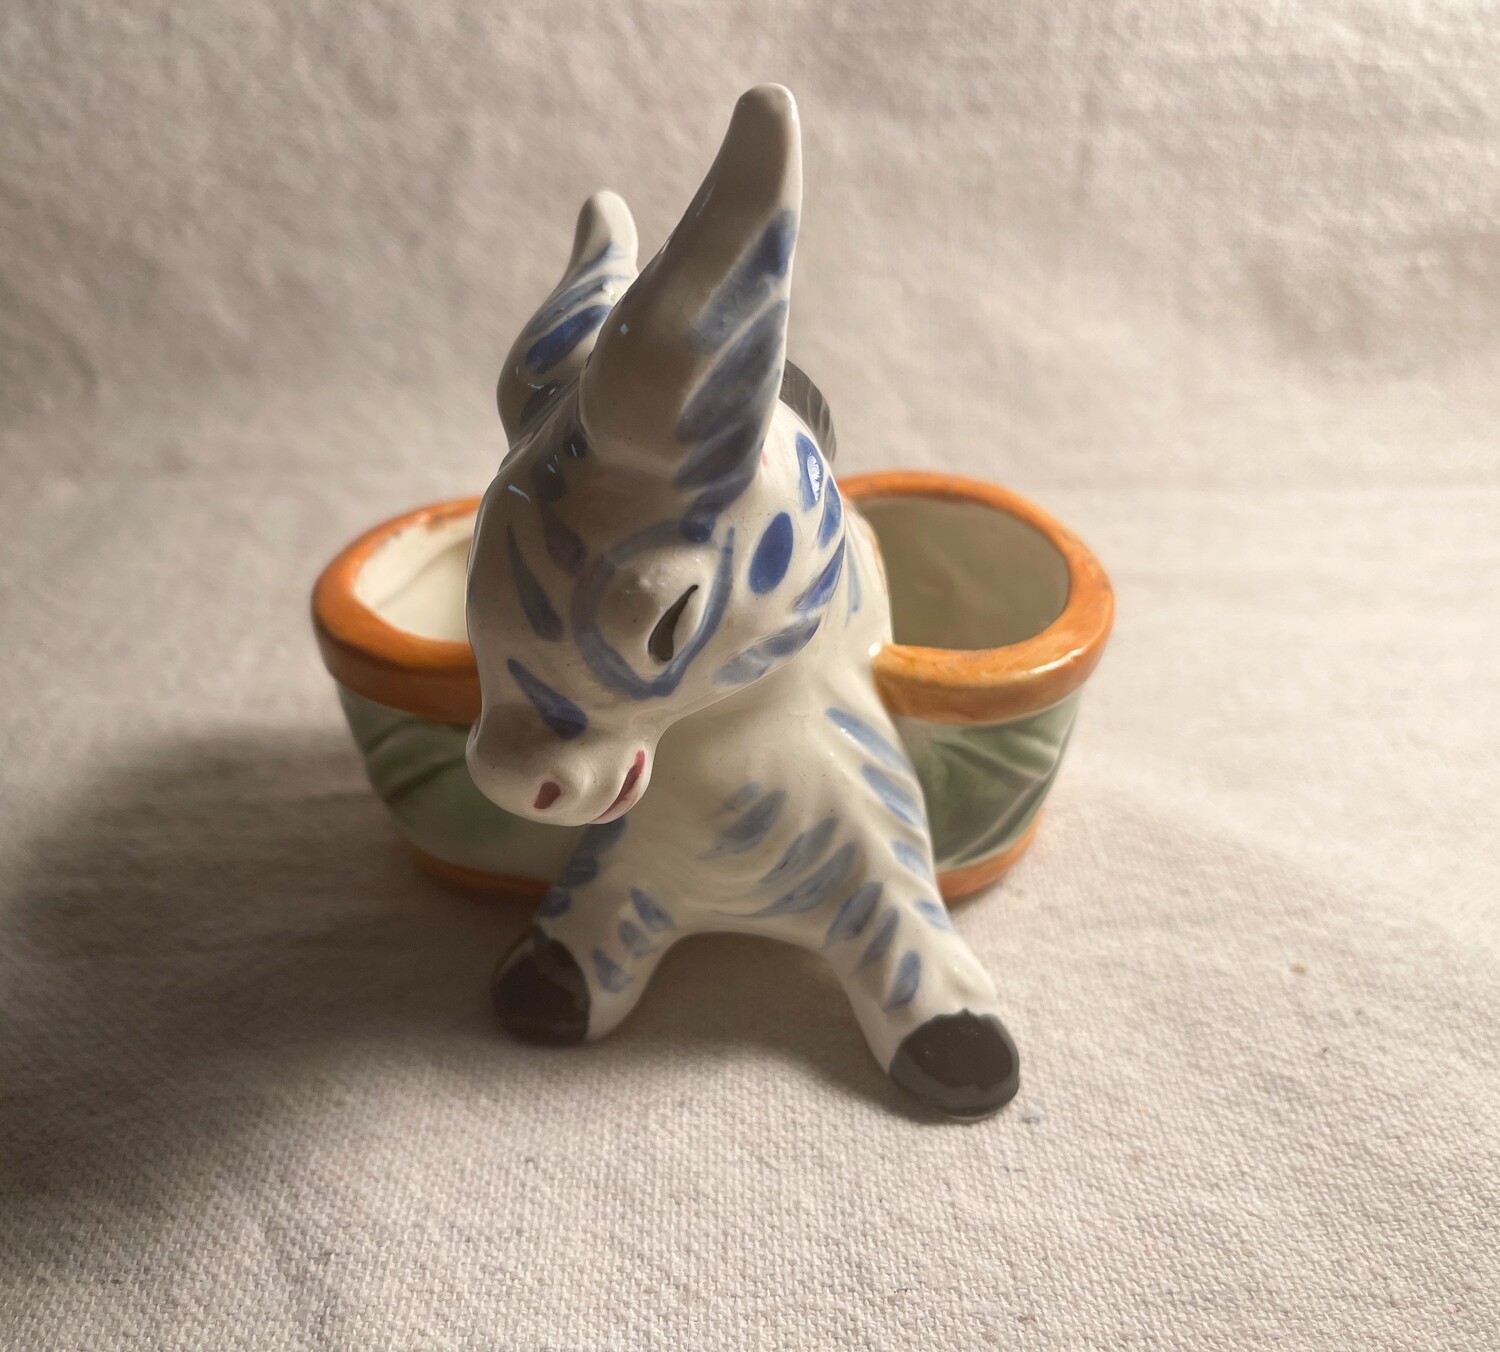 Vintage Ceramic Mini Donkey Planter Made in Occupied Japan